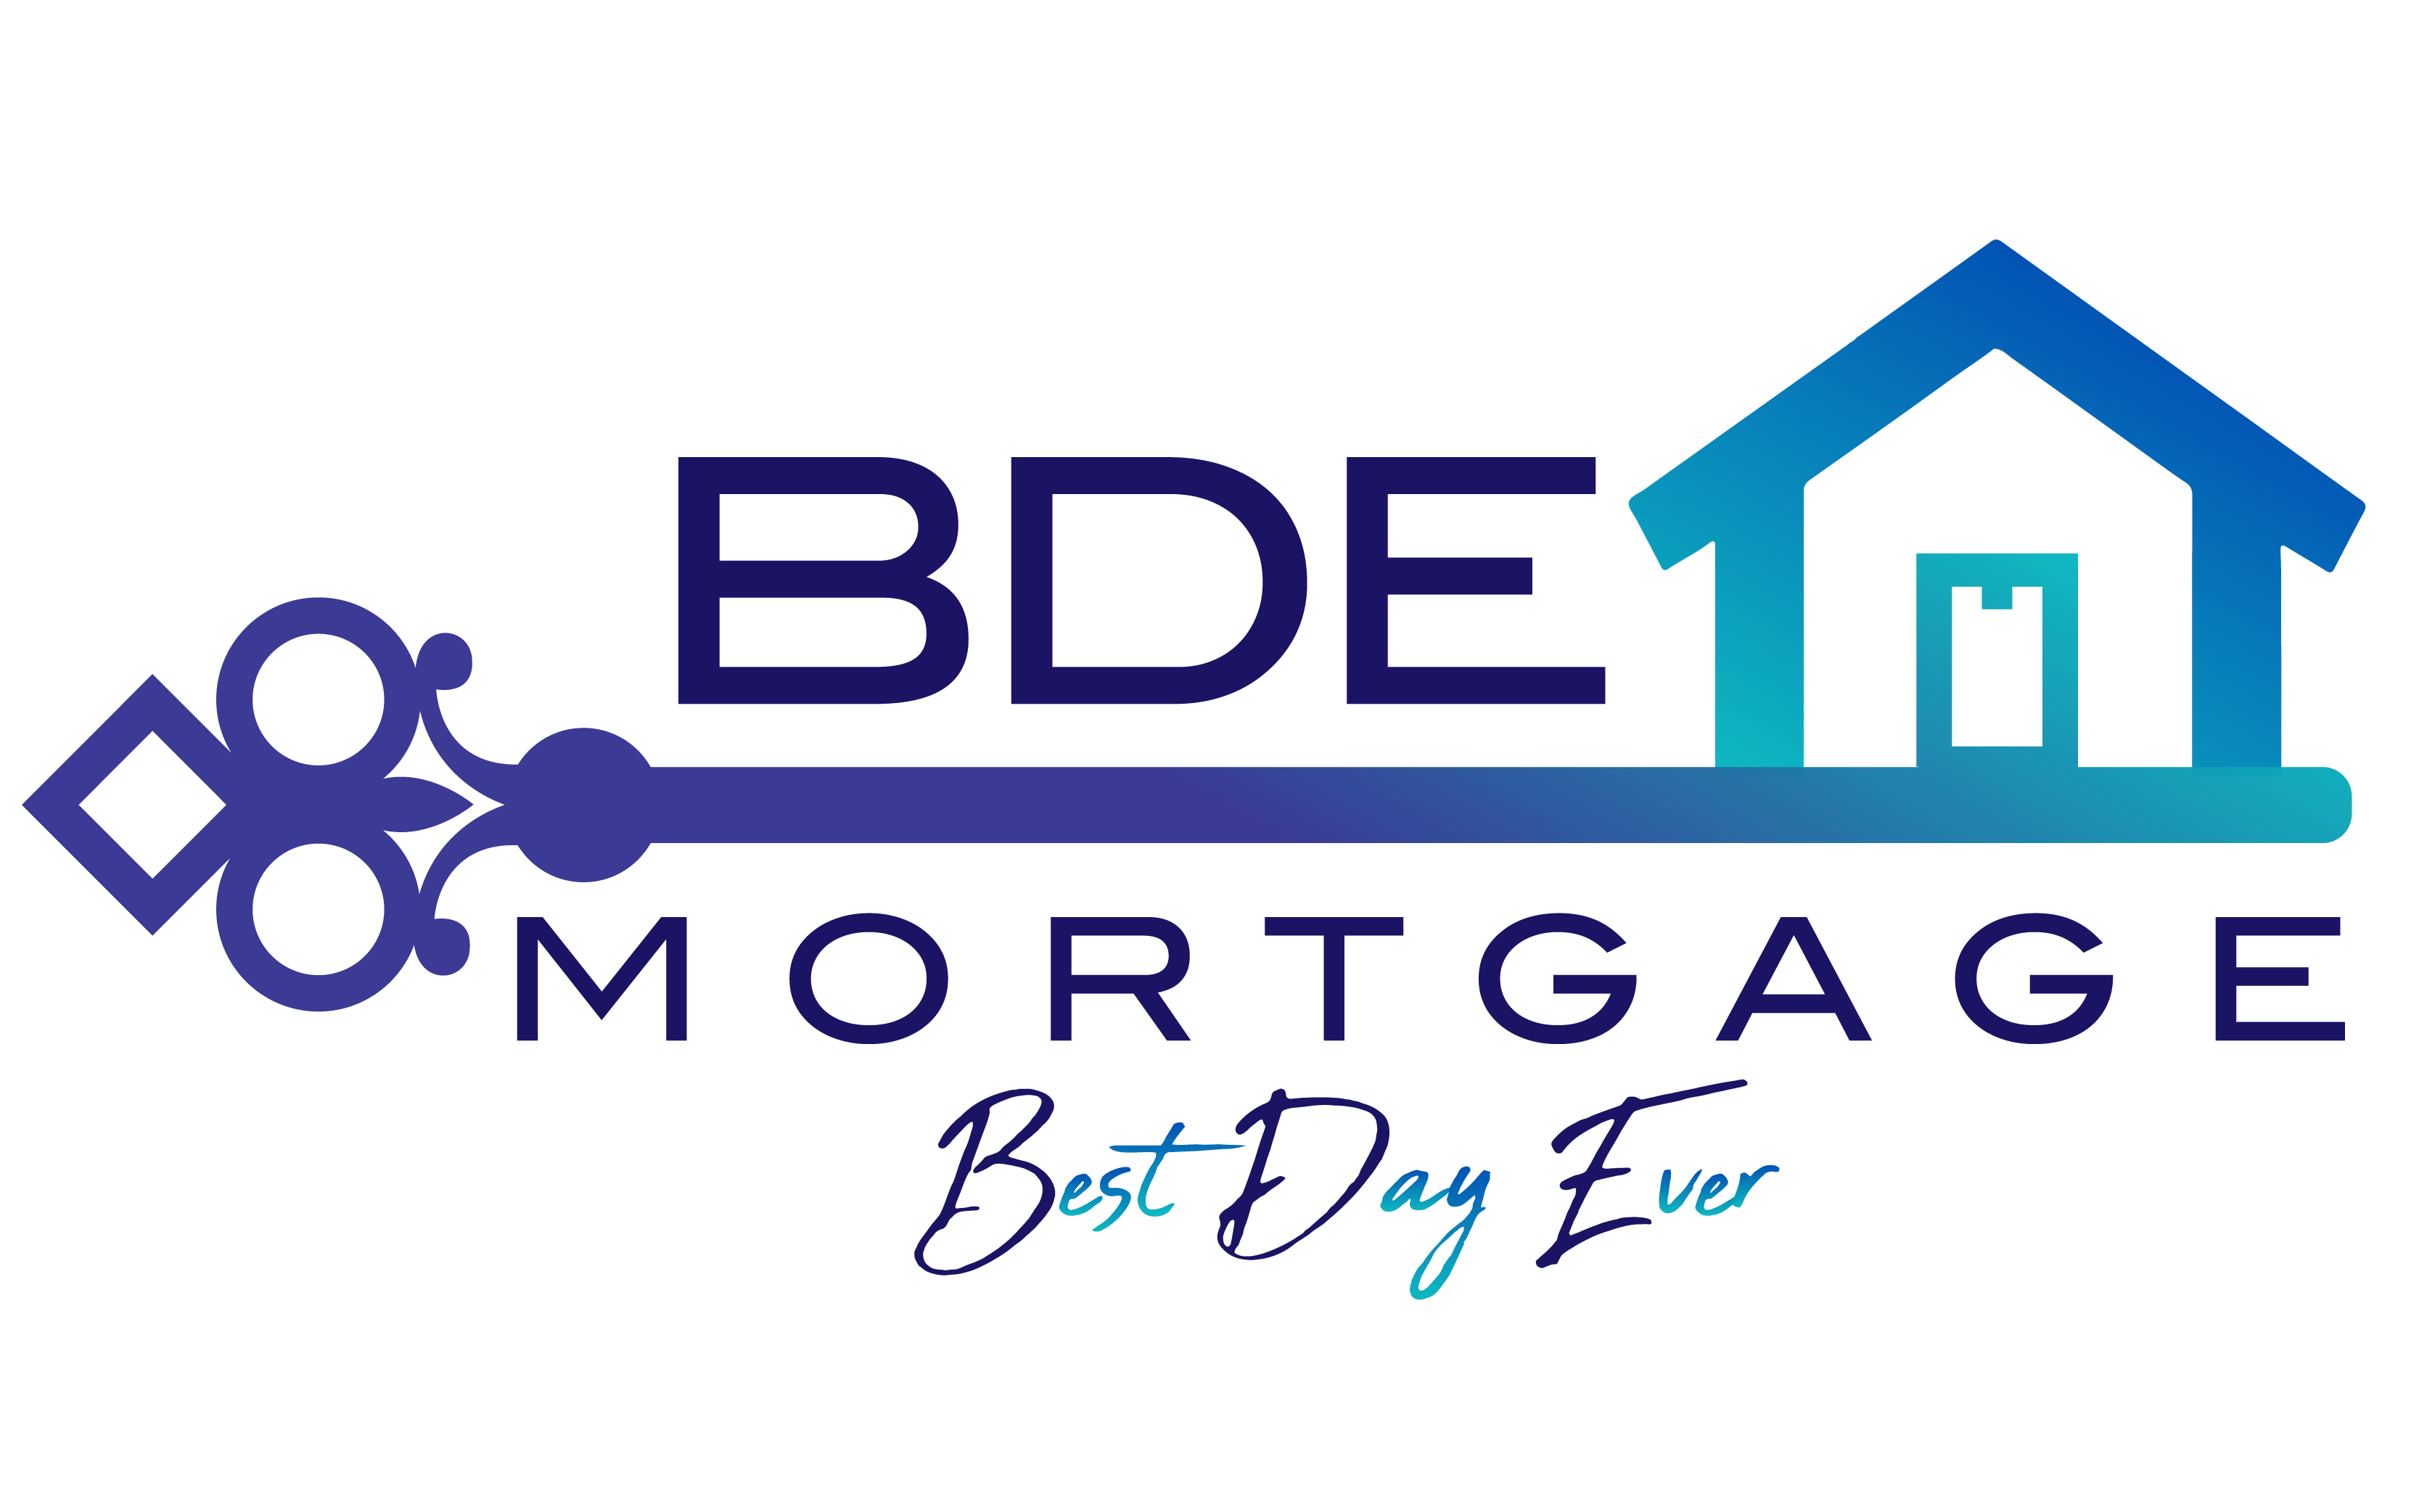 BDEMortgage Services